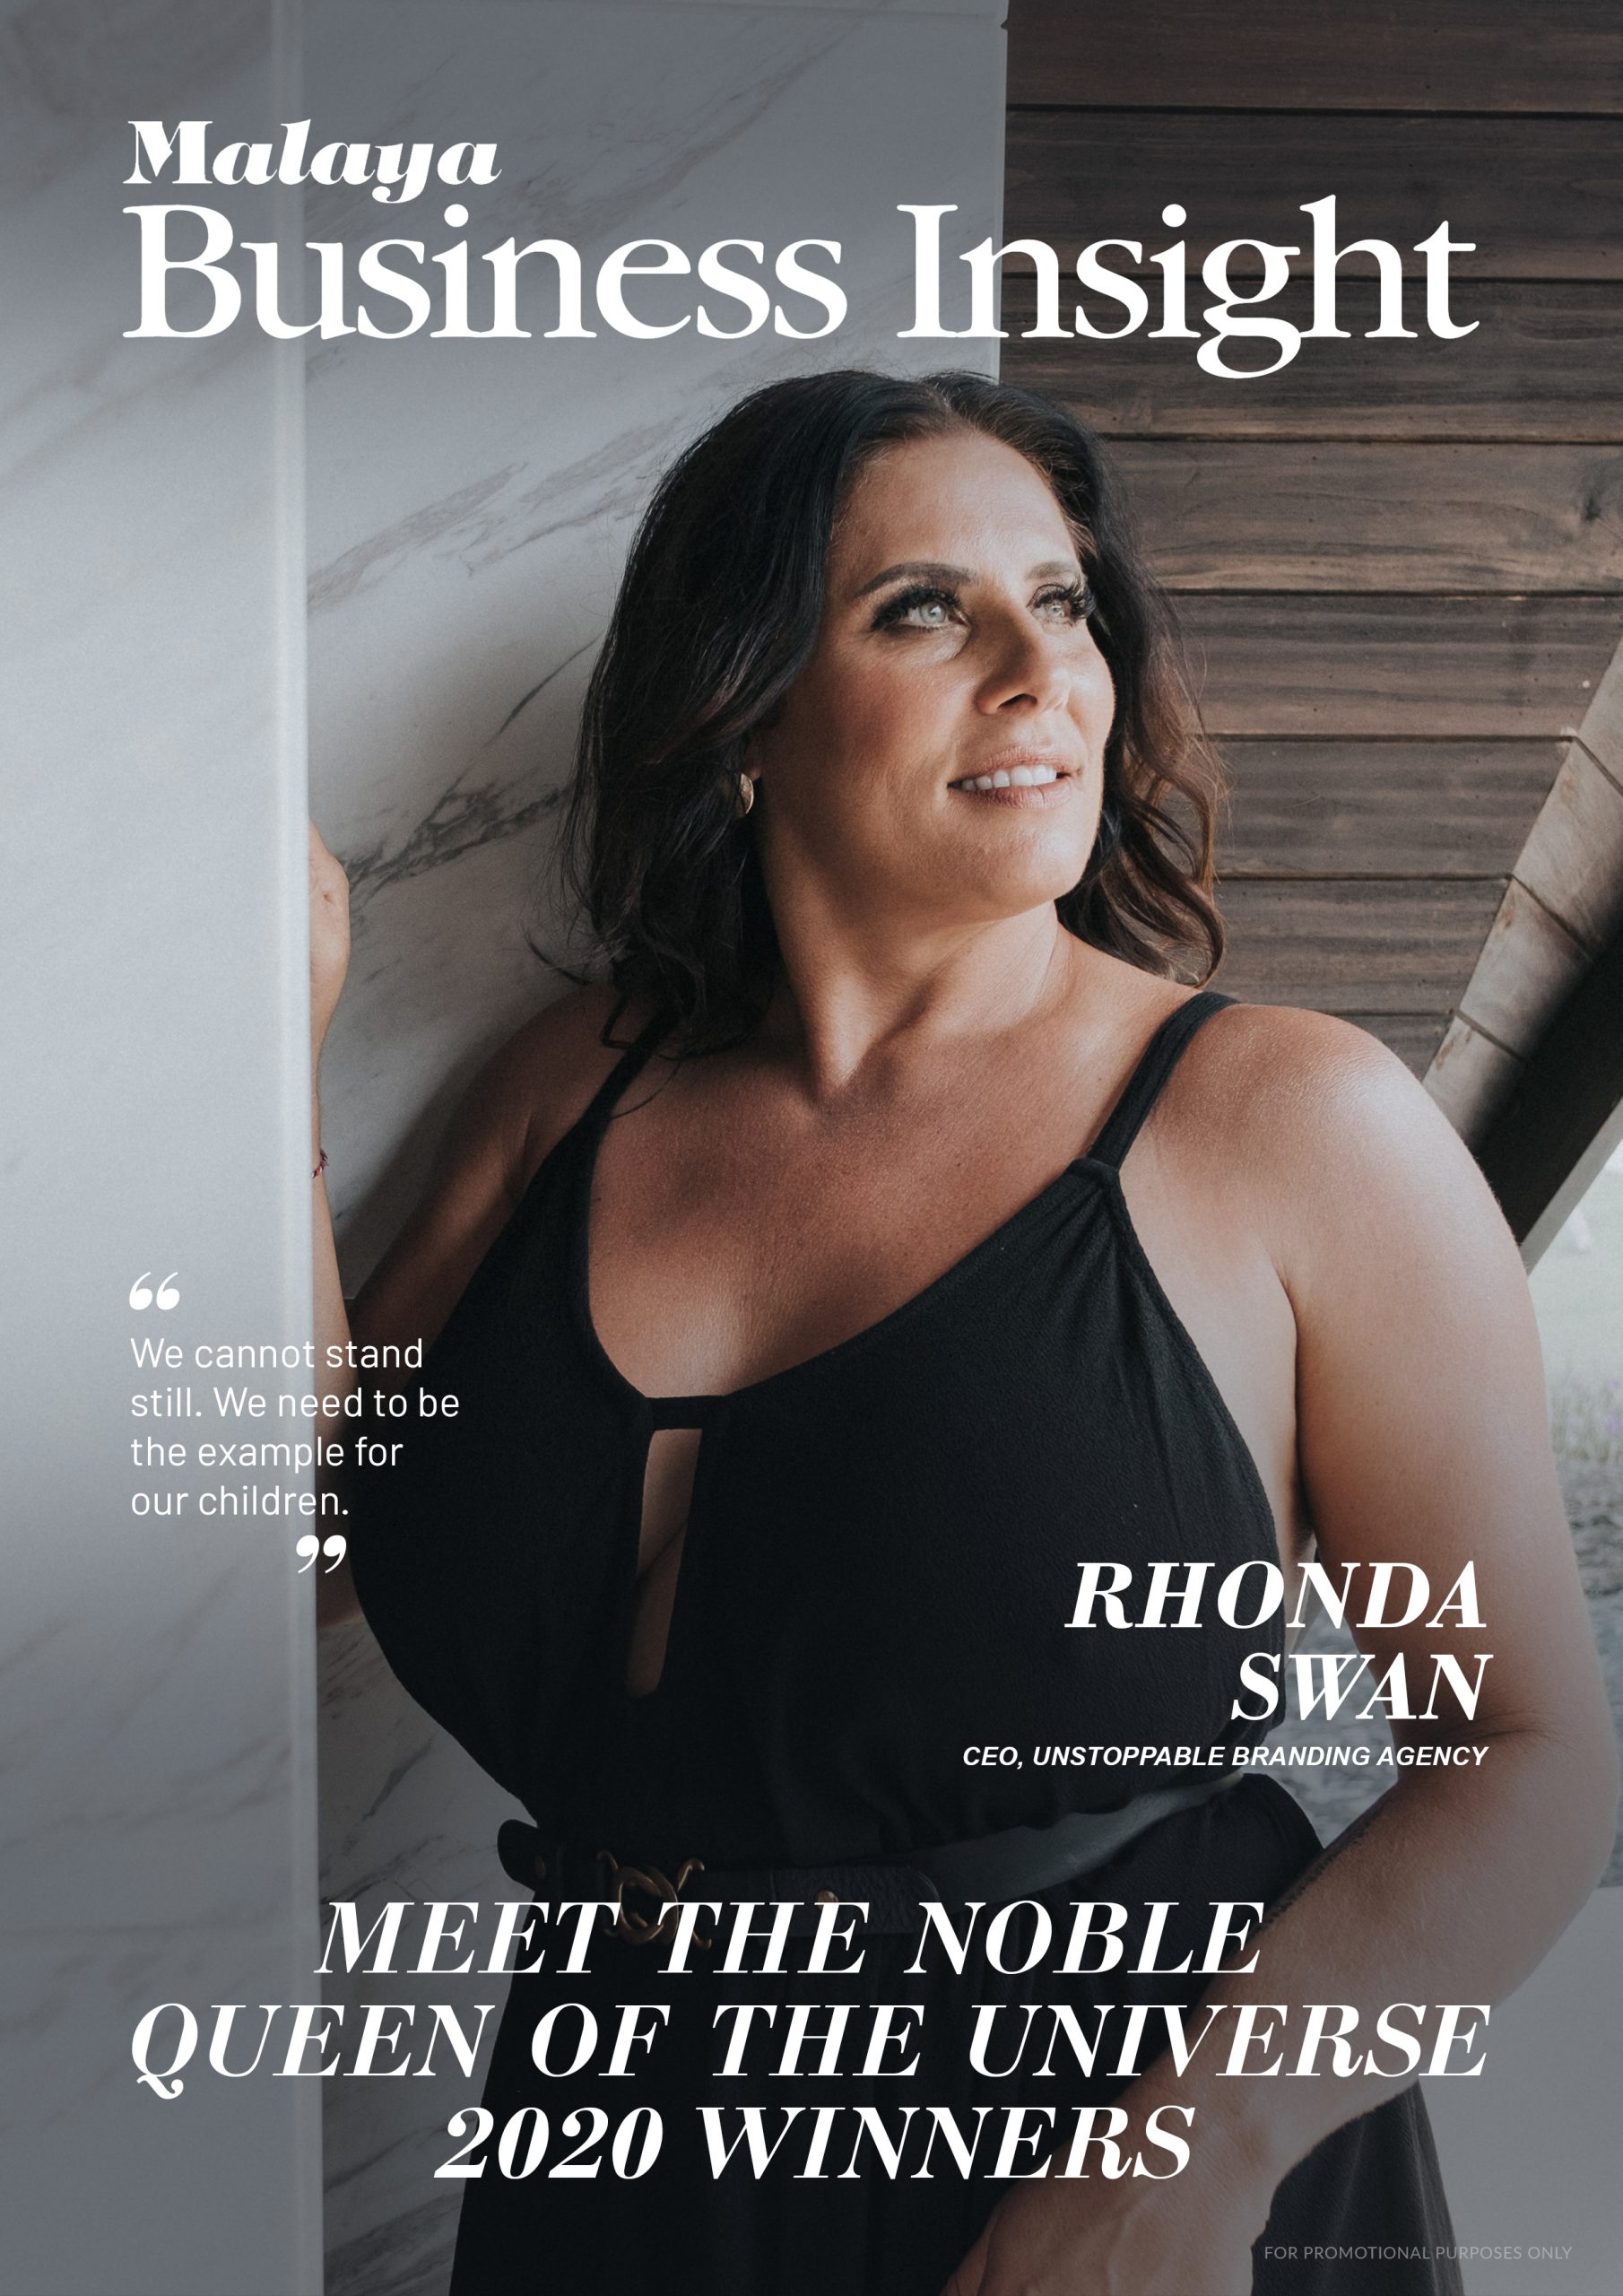 Rhonda-Swan-MalayaBusinessInsight-Cover-scaled.jpg